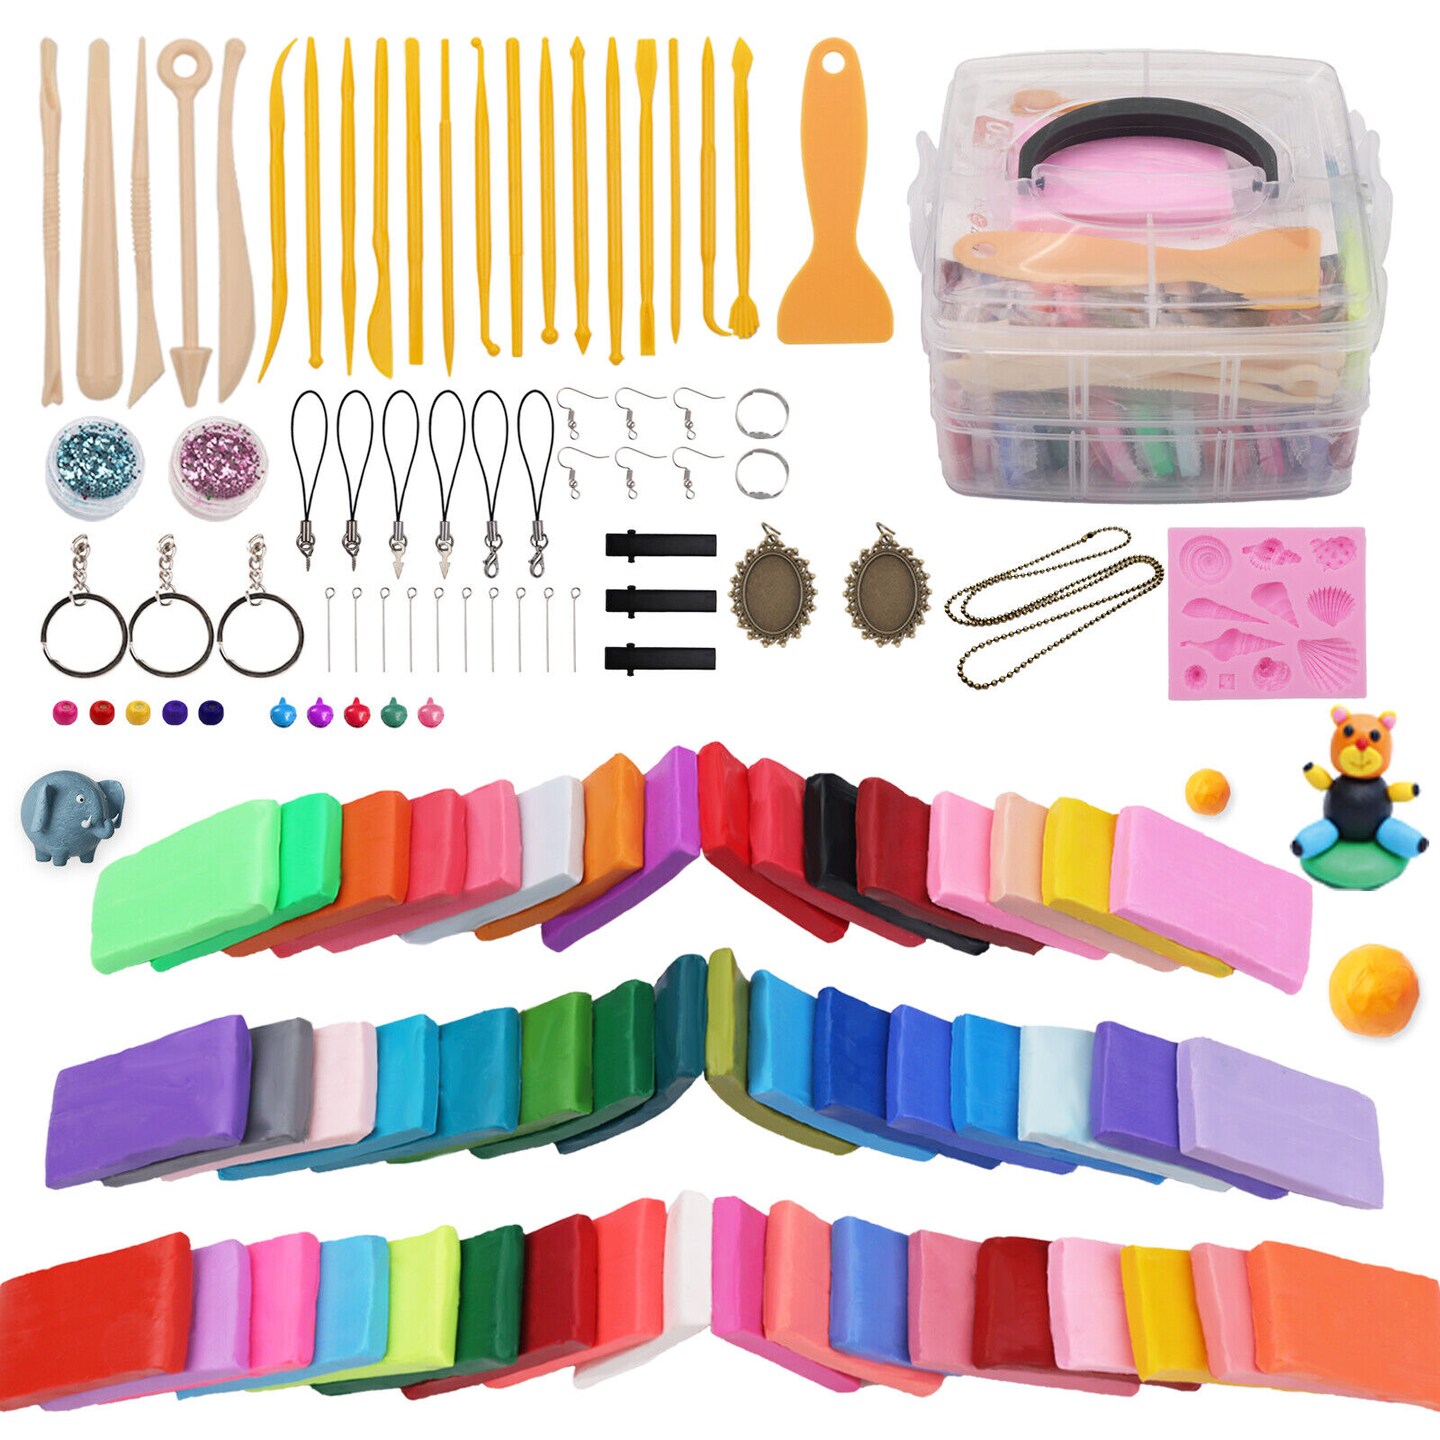 Kitcheniva 50 Colors DIY Polymer Clay Kit Oven Bake Non-Toxic